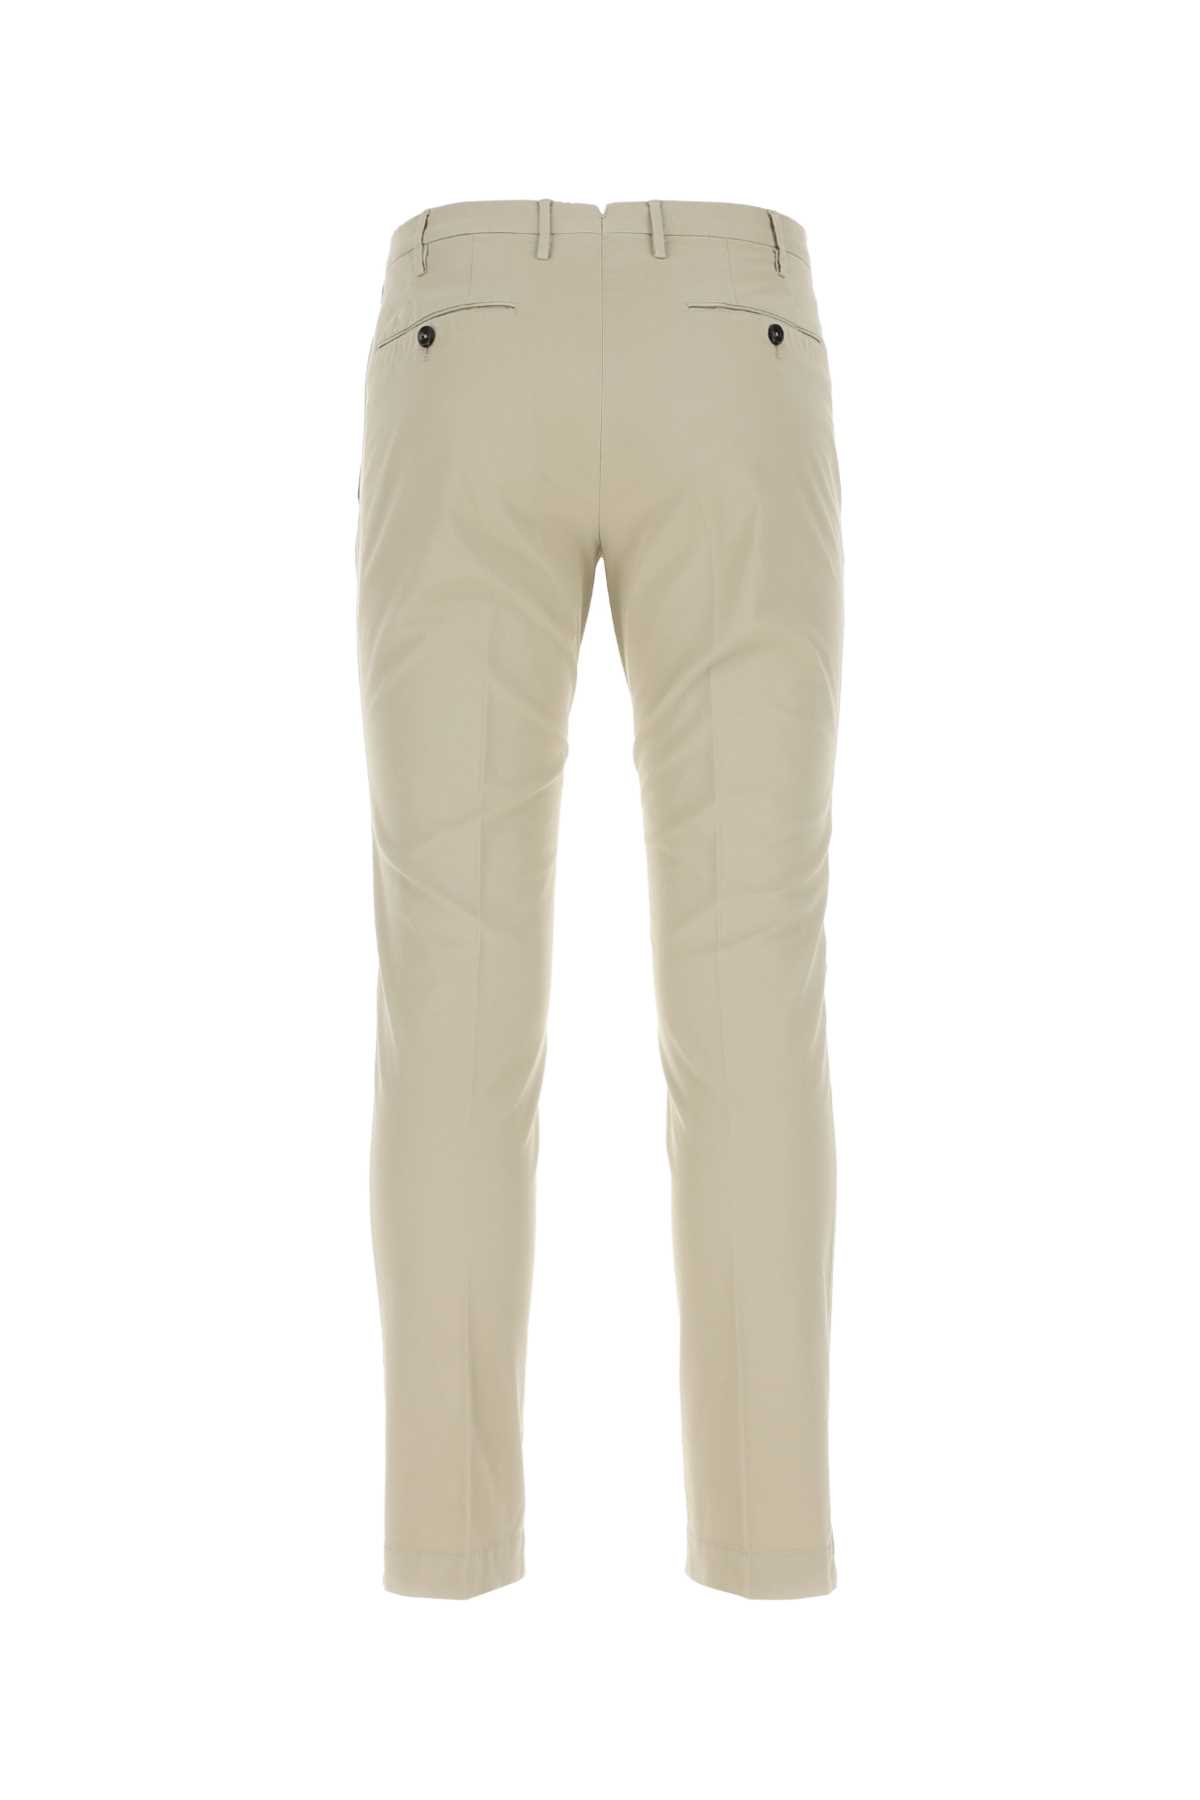 Pt01 Beige Stretch Cotton Trouser